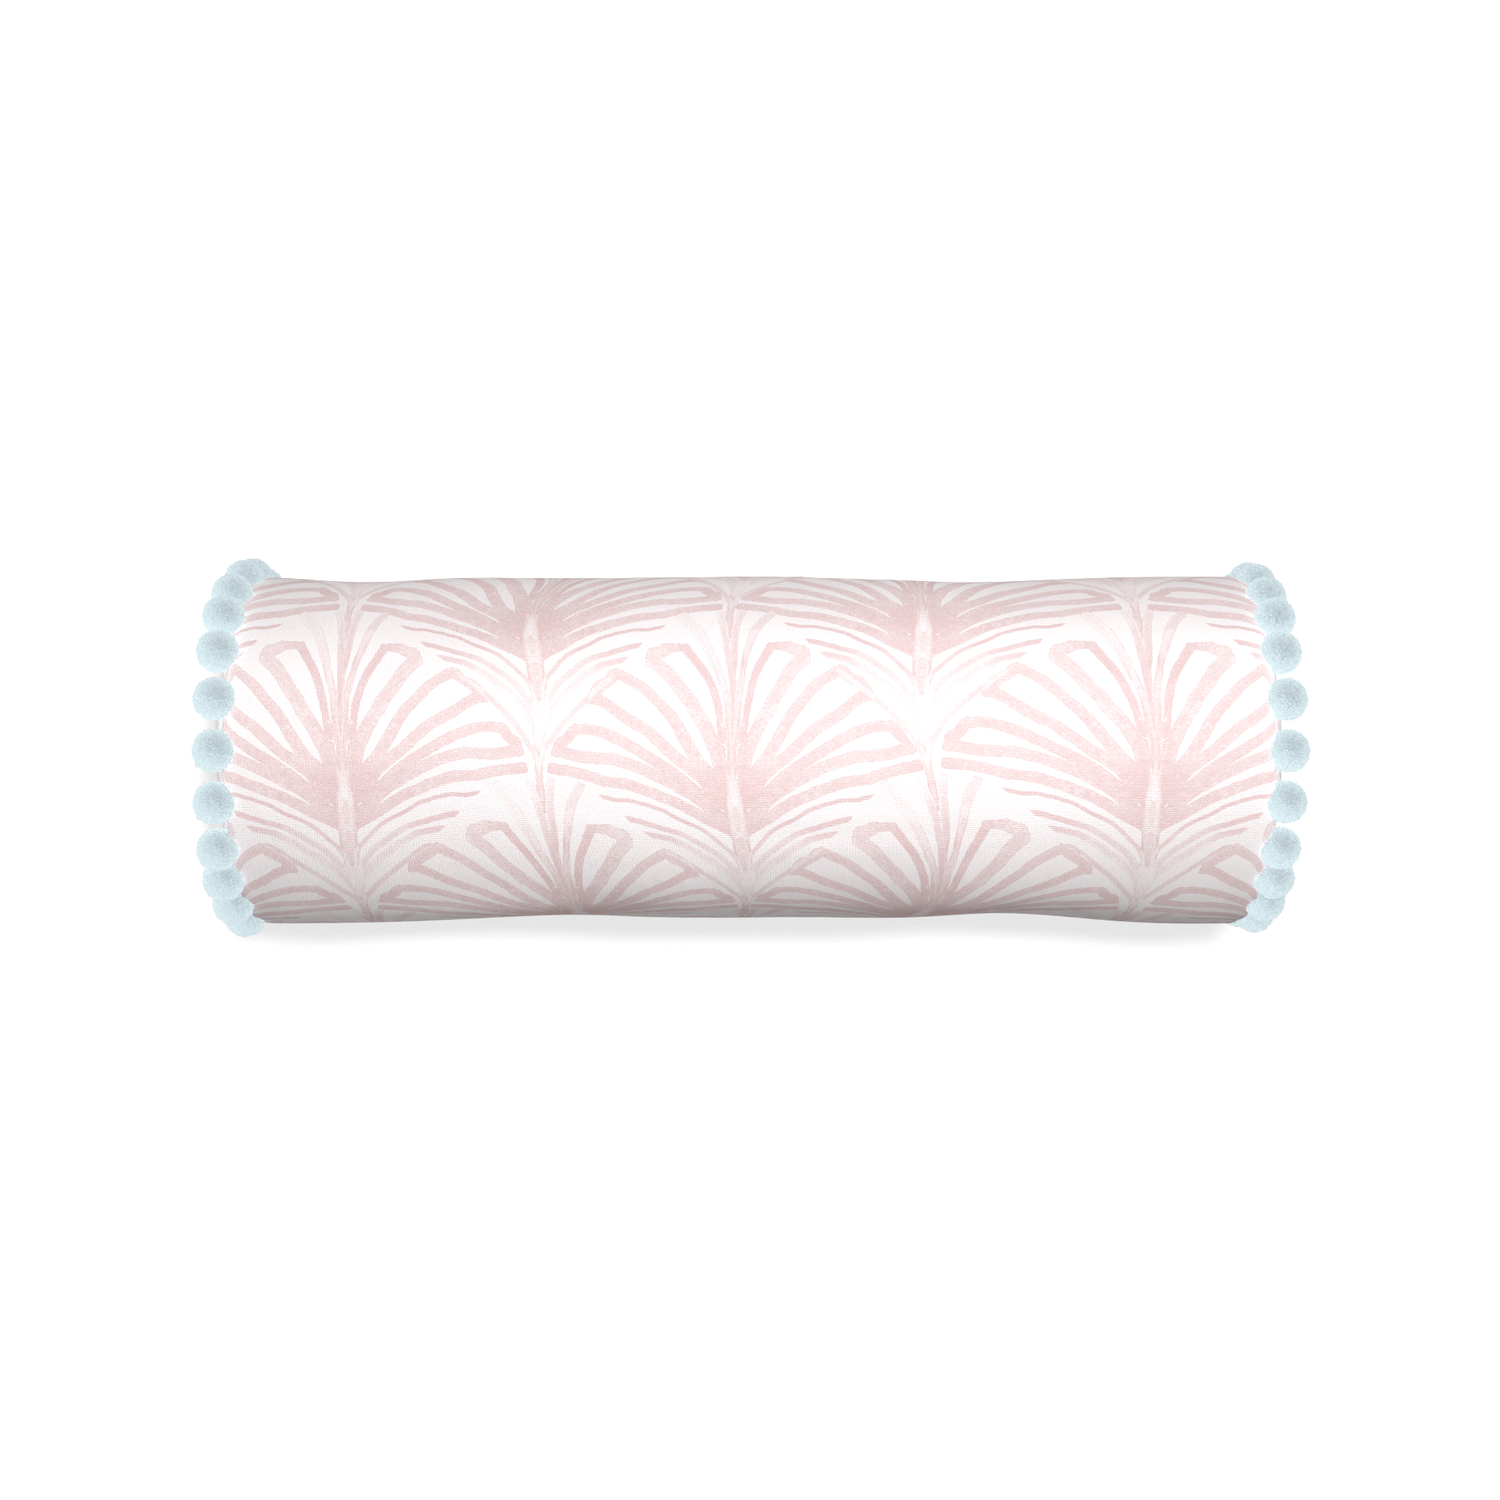 Bolster suzy rose custom pillow with powder pom pom on white background